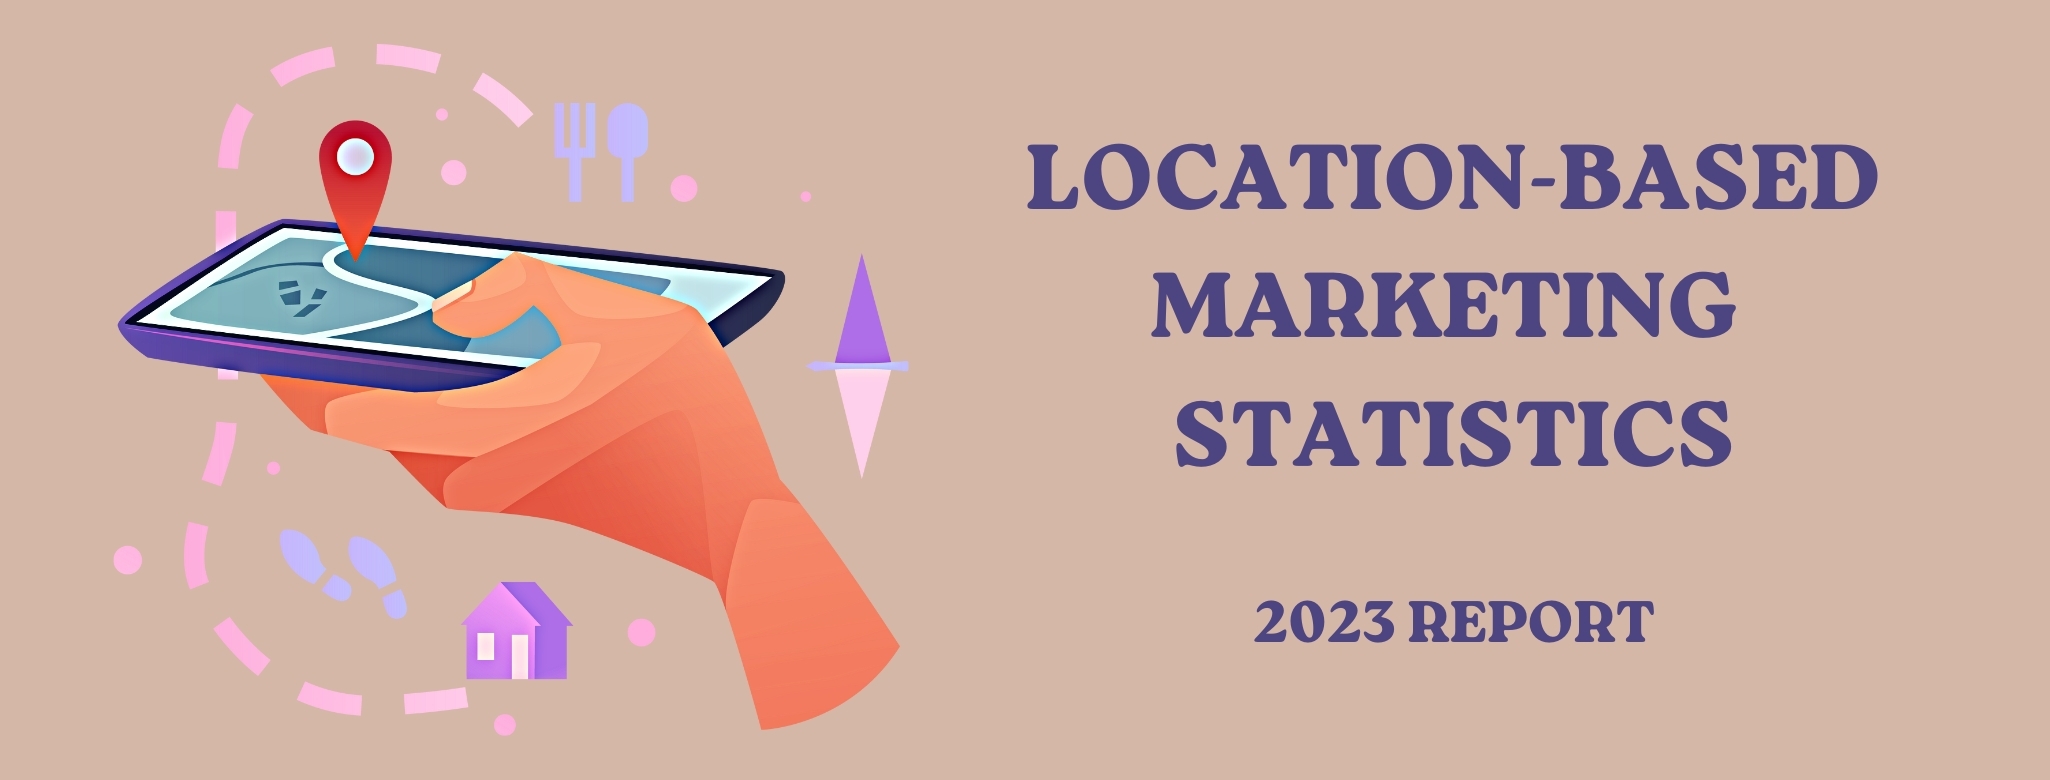 location-based marketing statistics